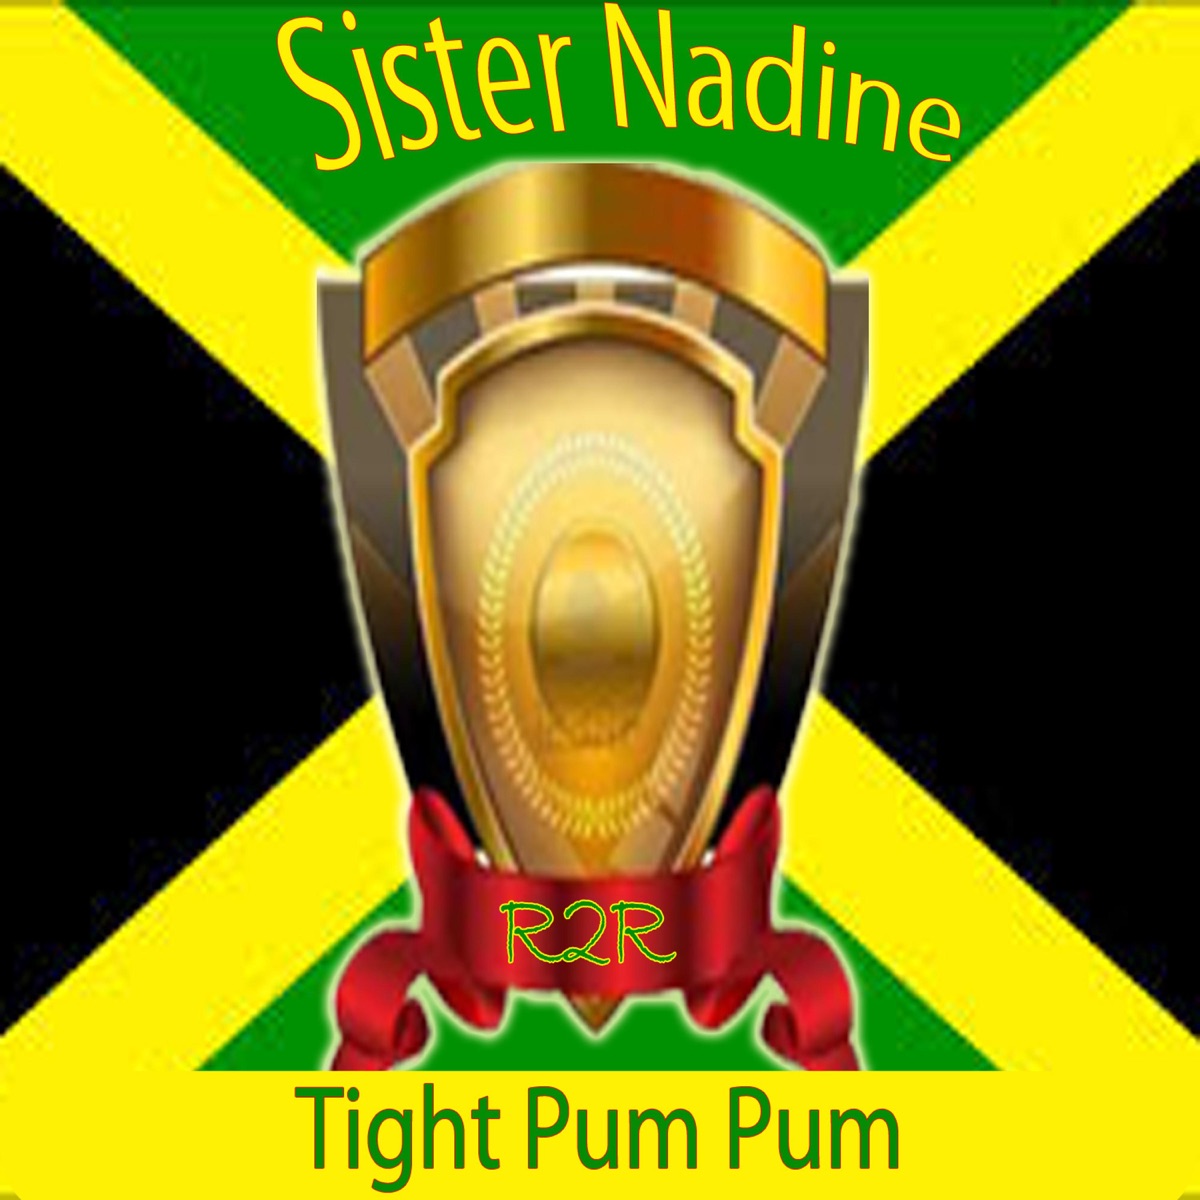 Tight Pum Pum - Single - Album by Sister Nadine - Apple Music